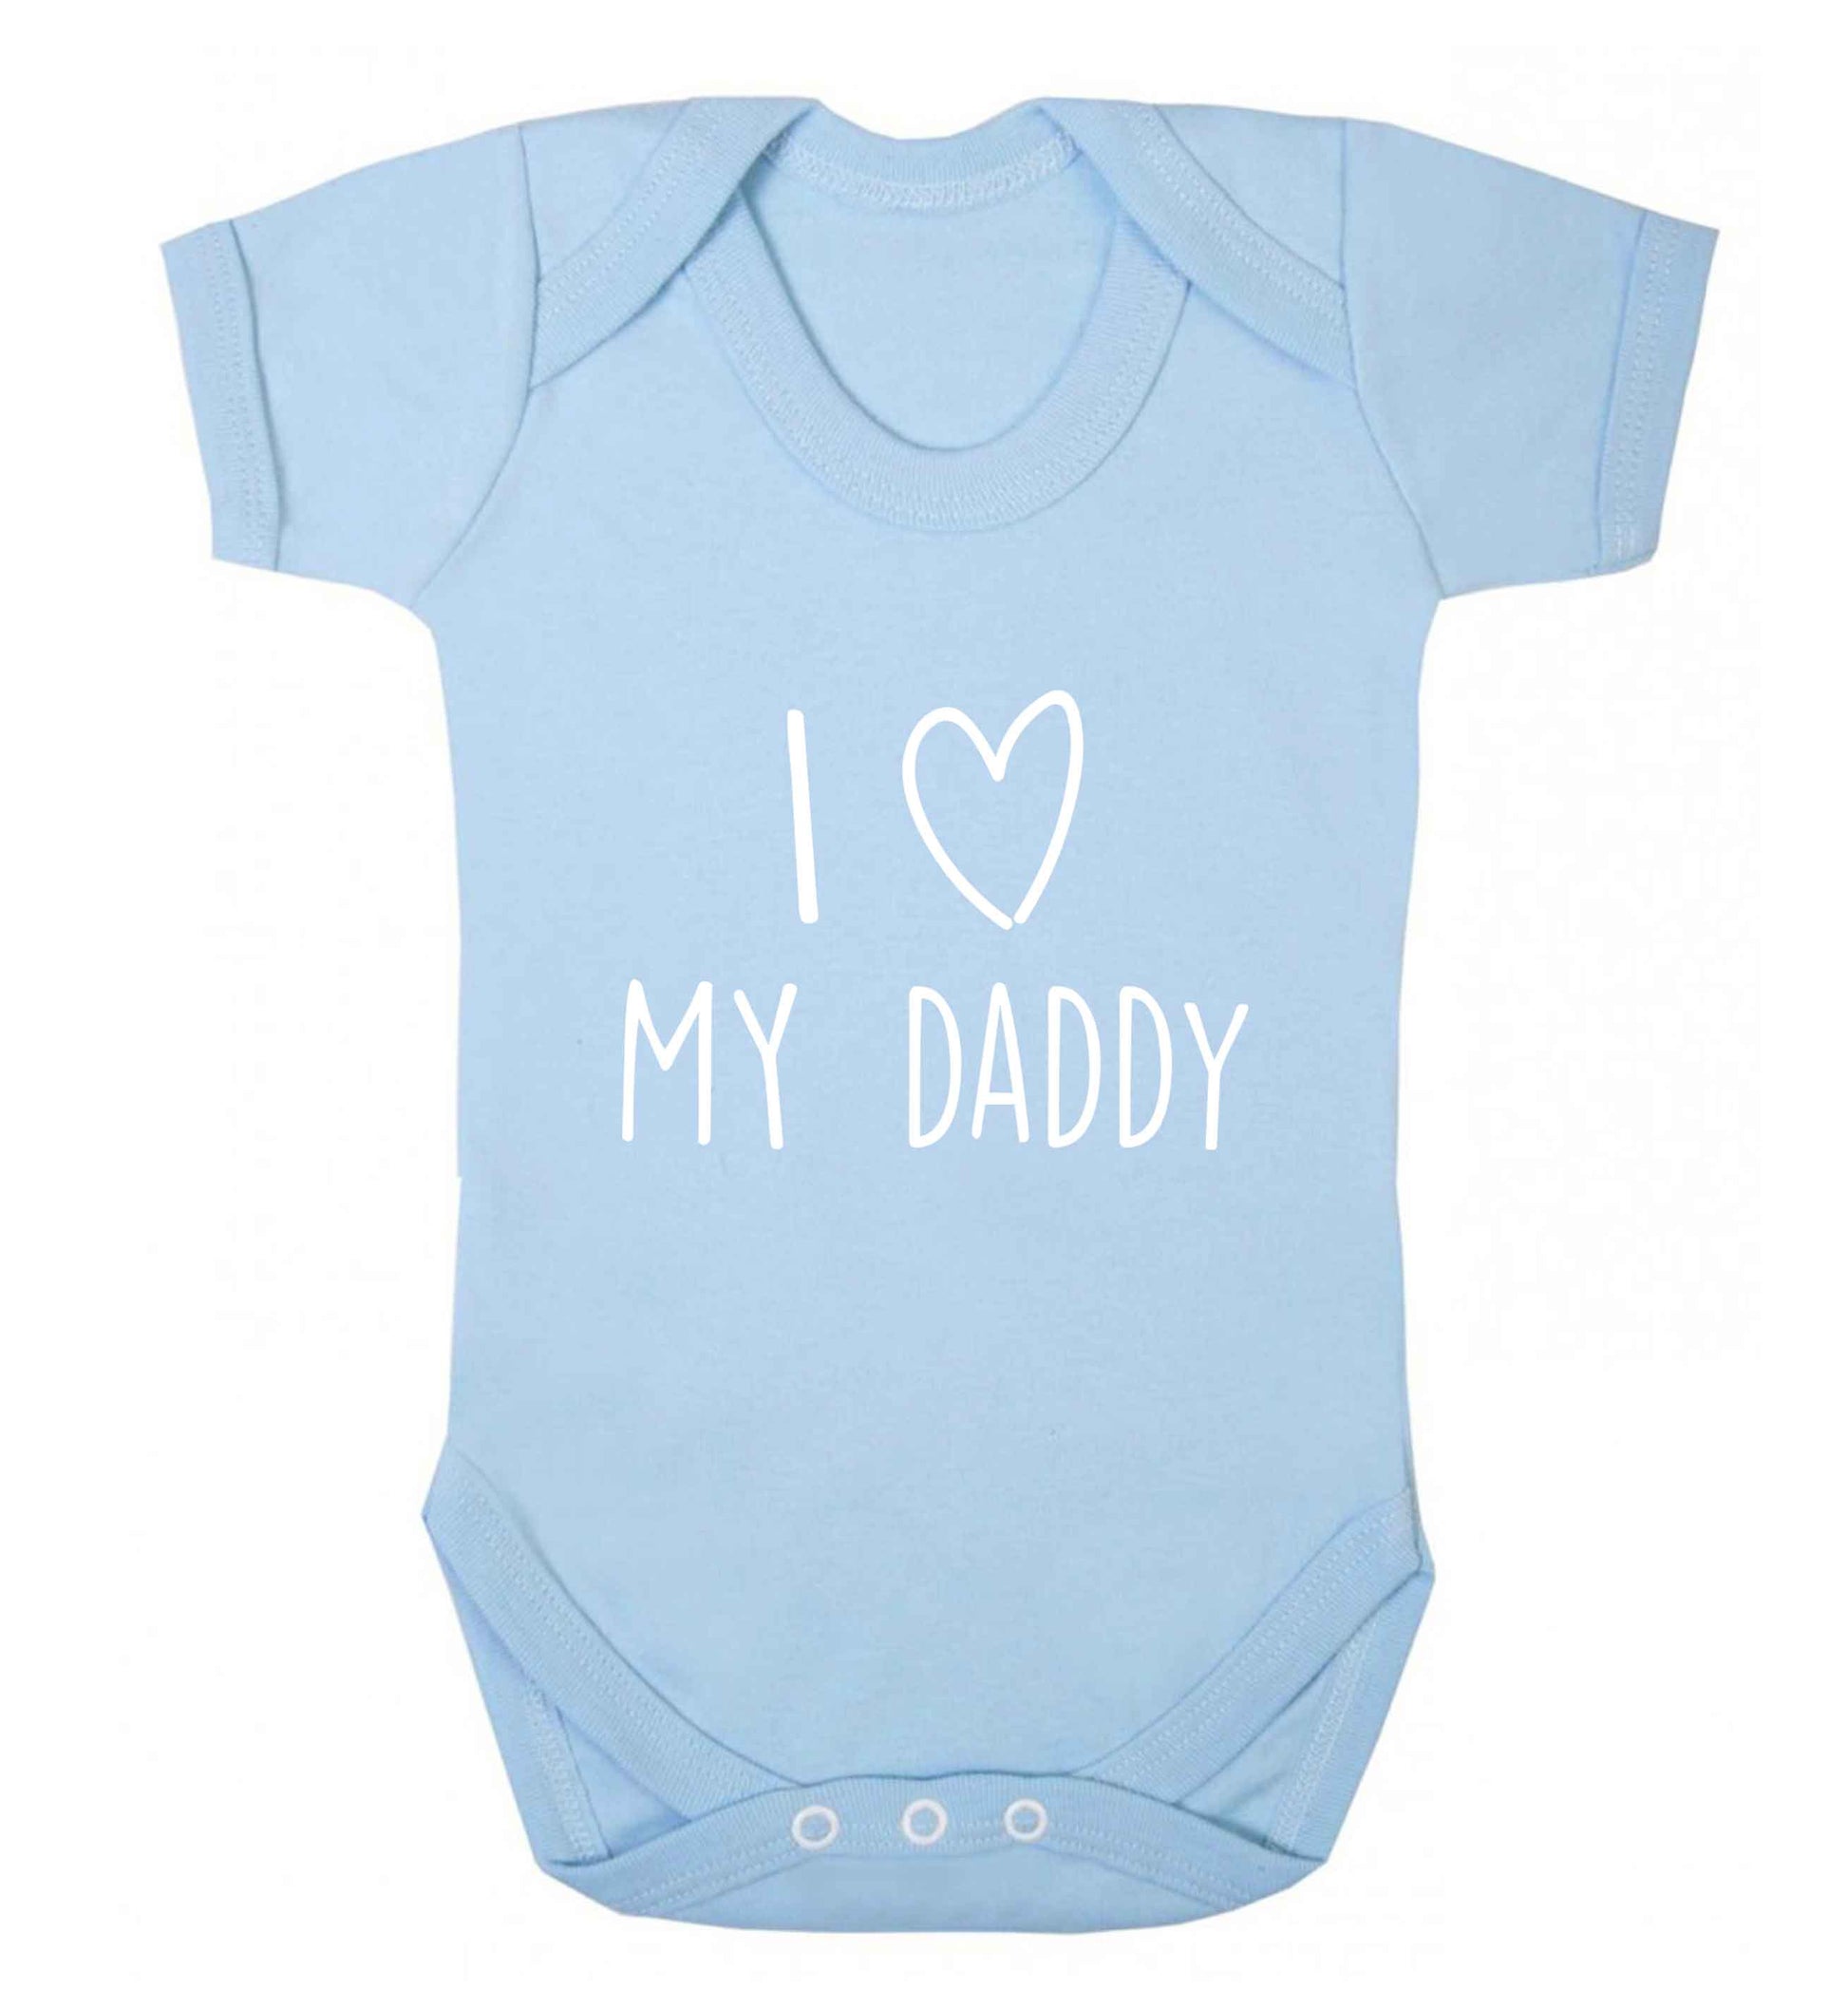 I love my daddy baby vest pale blue 18-24 months